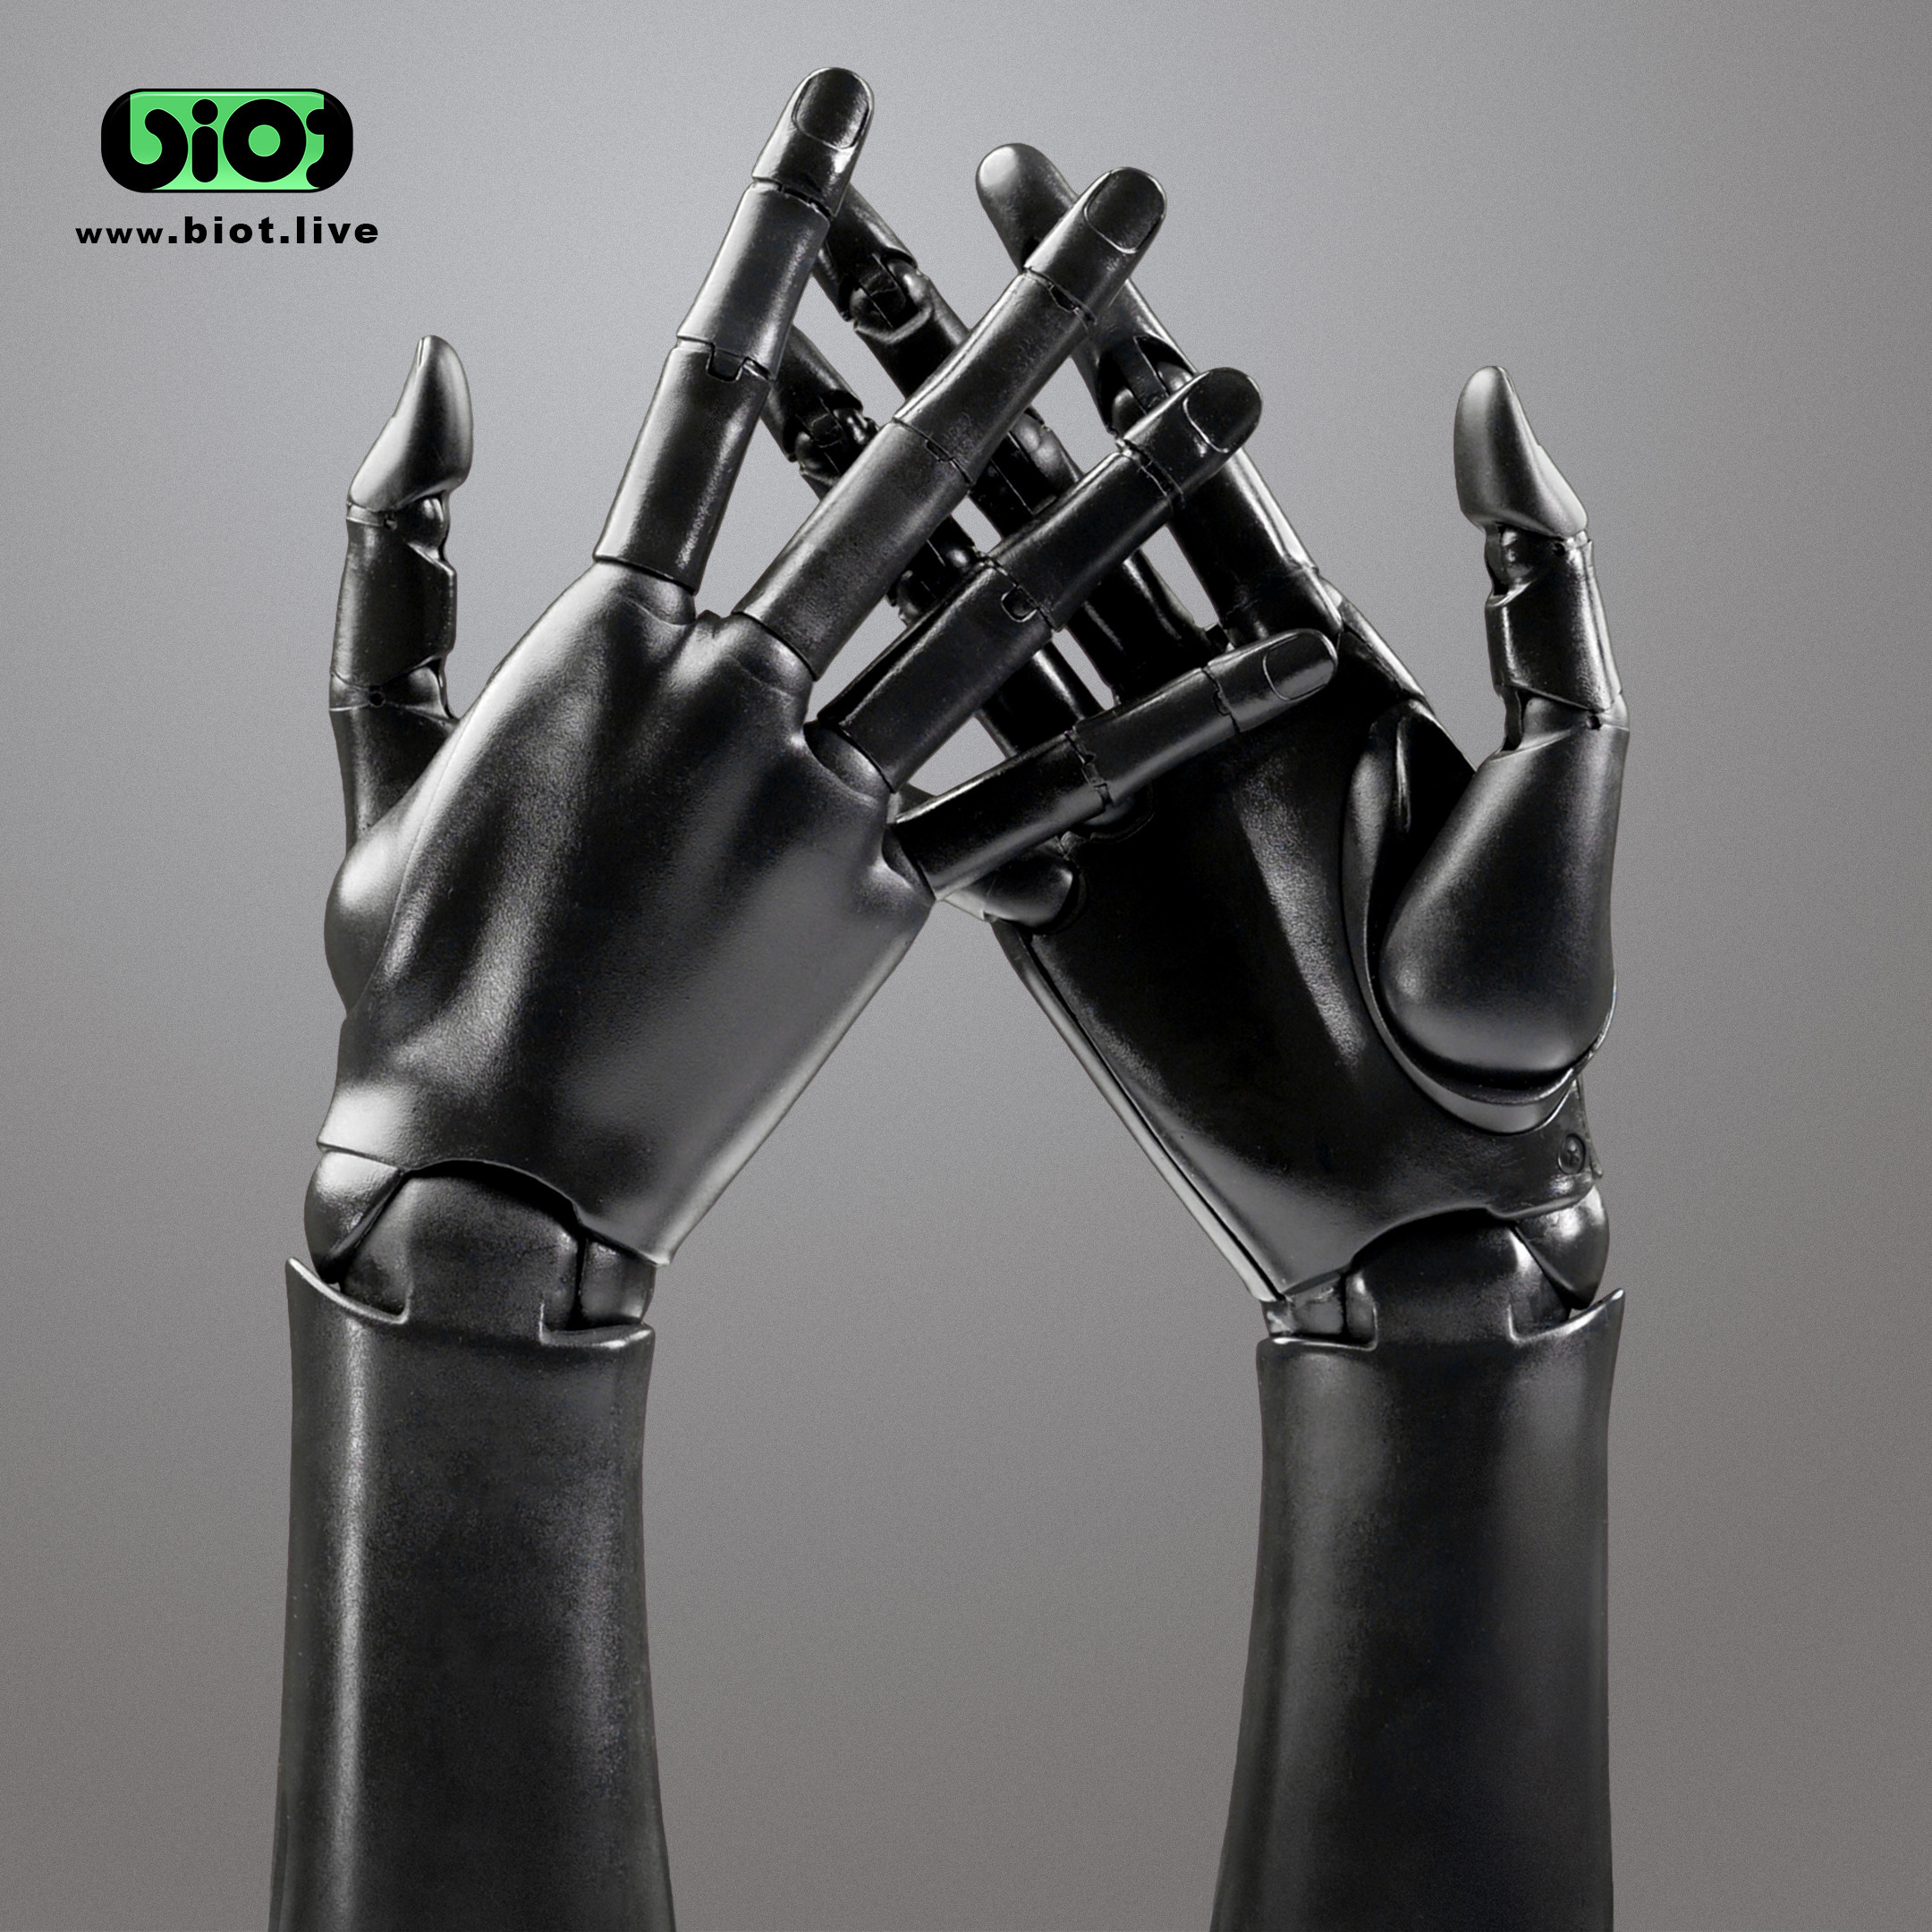 Pair of bionic hands